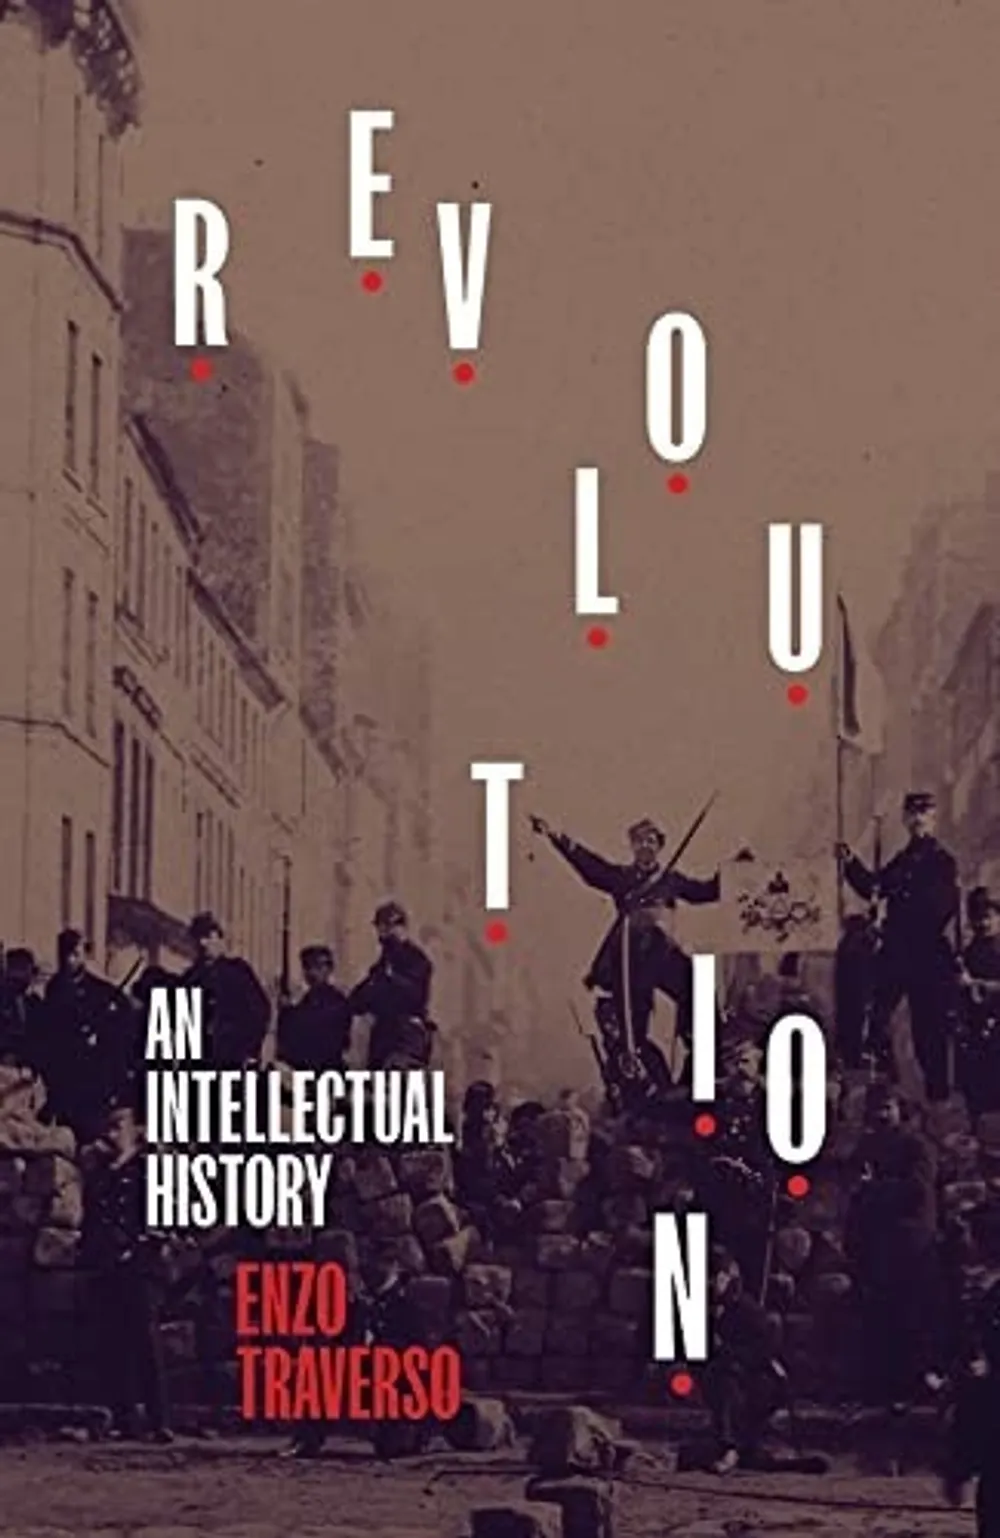 Revolution, by Enzo Traverso